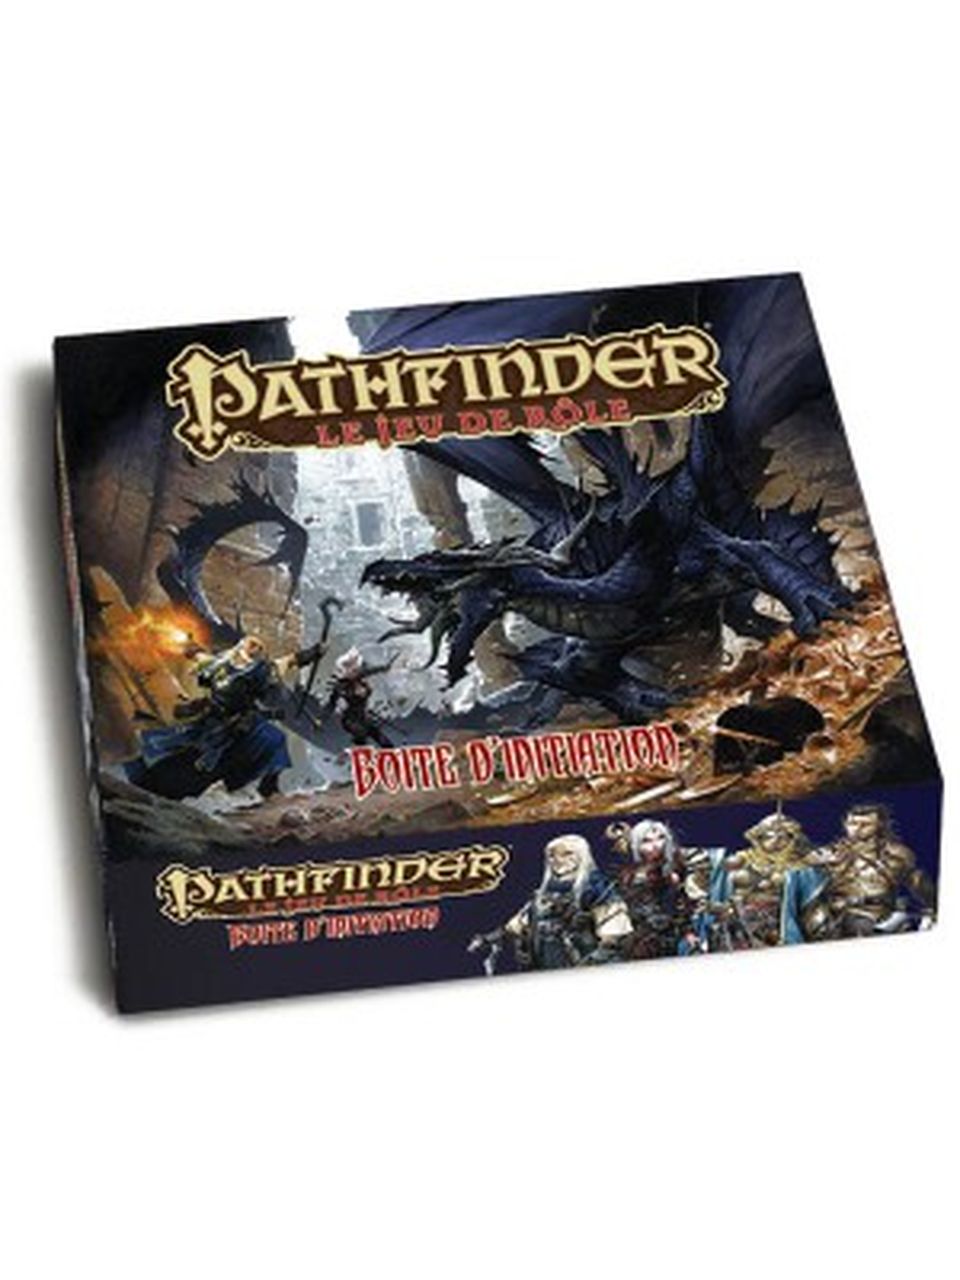 Pathfinder - Boite d'initiation Pathfinder JdR image